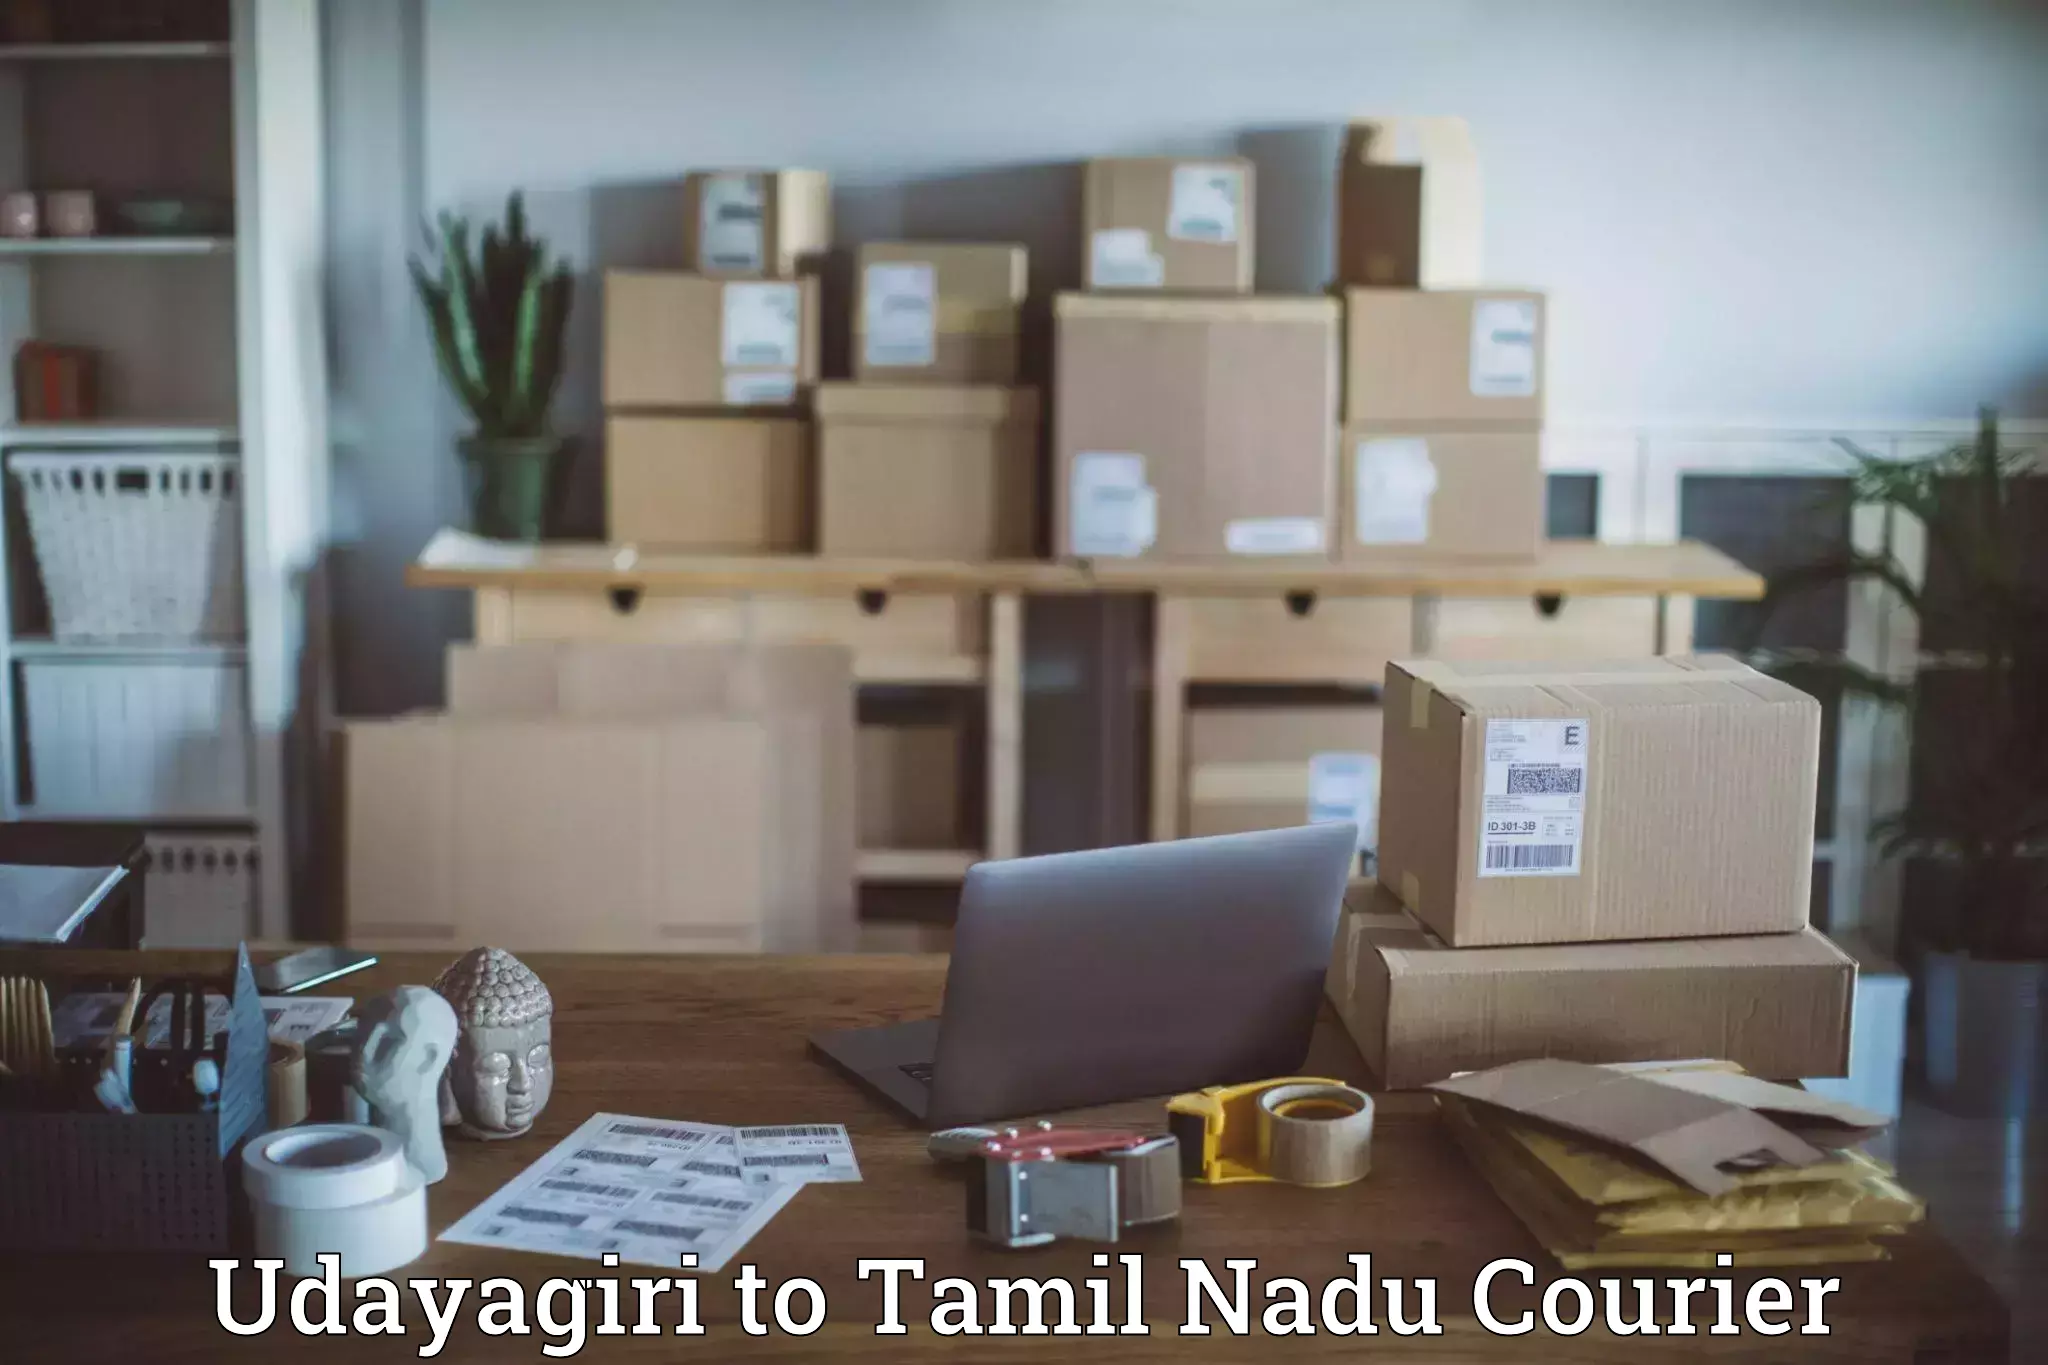 Nationwide courier service Udayagiri to Ennore Port Chennai